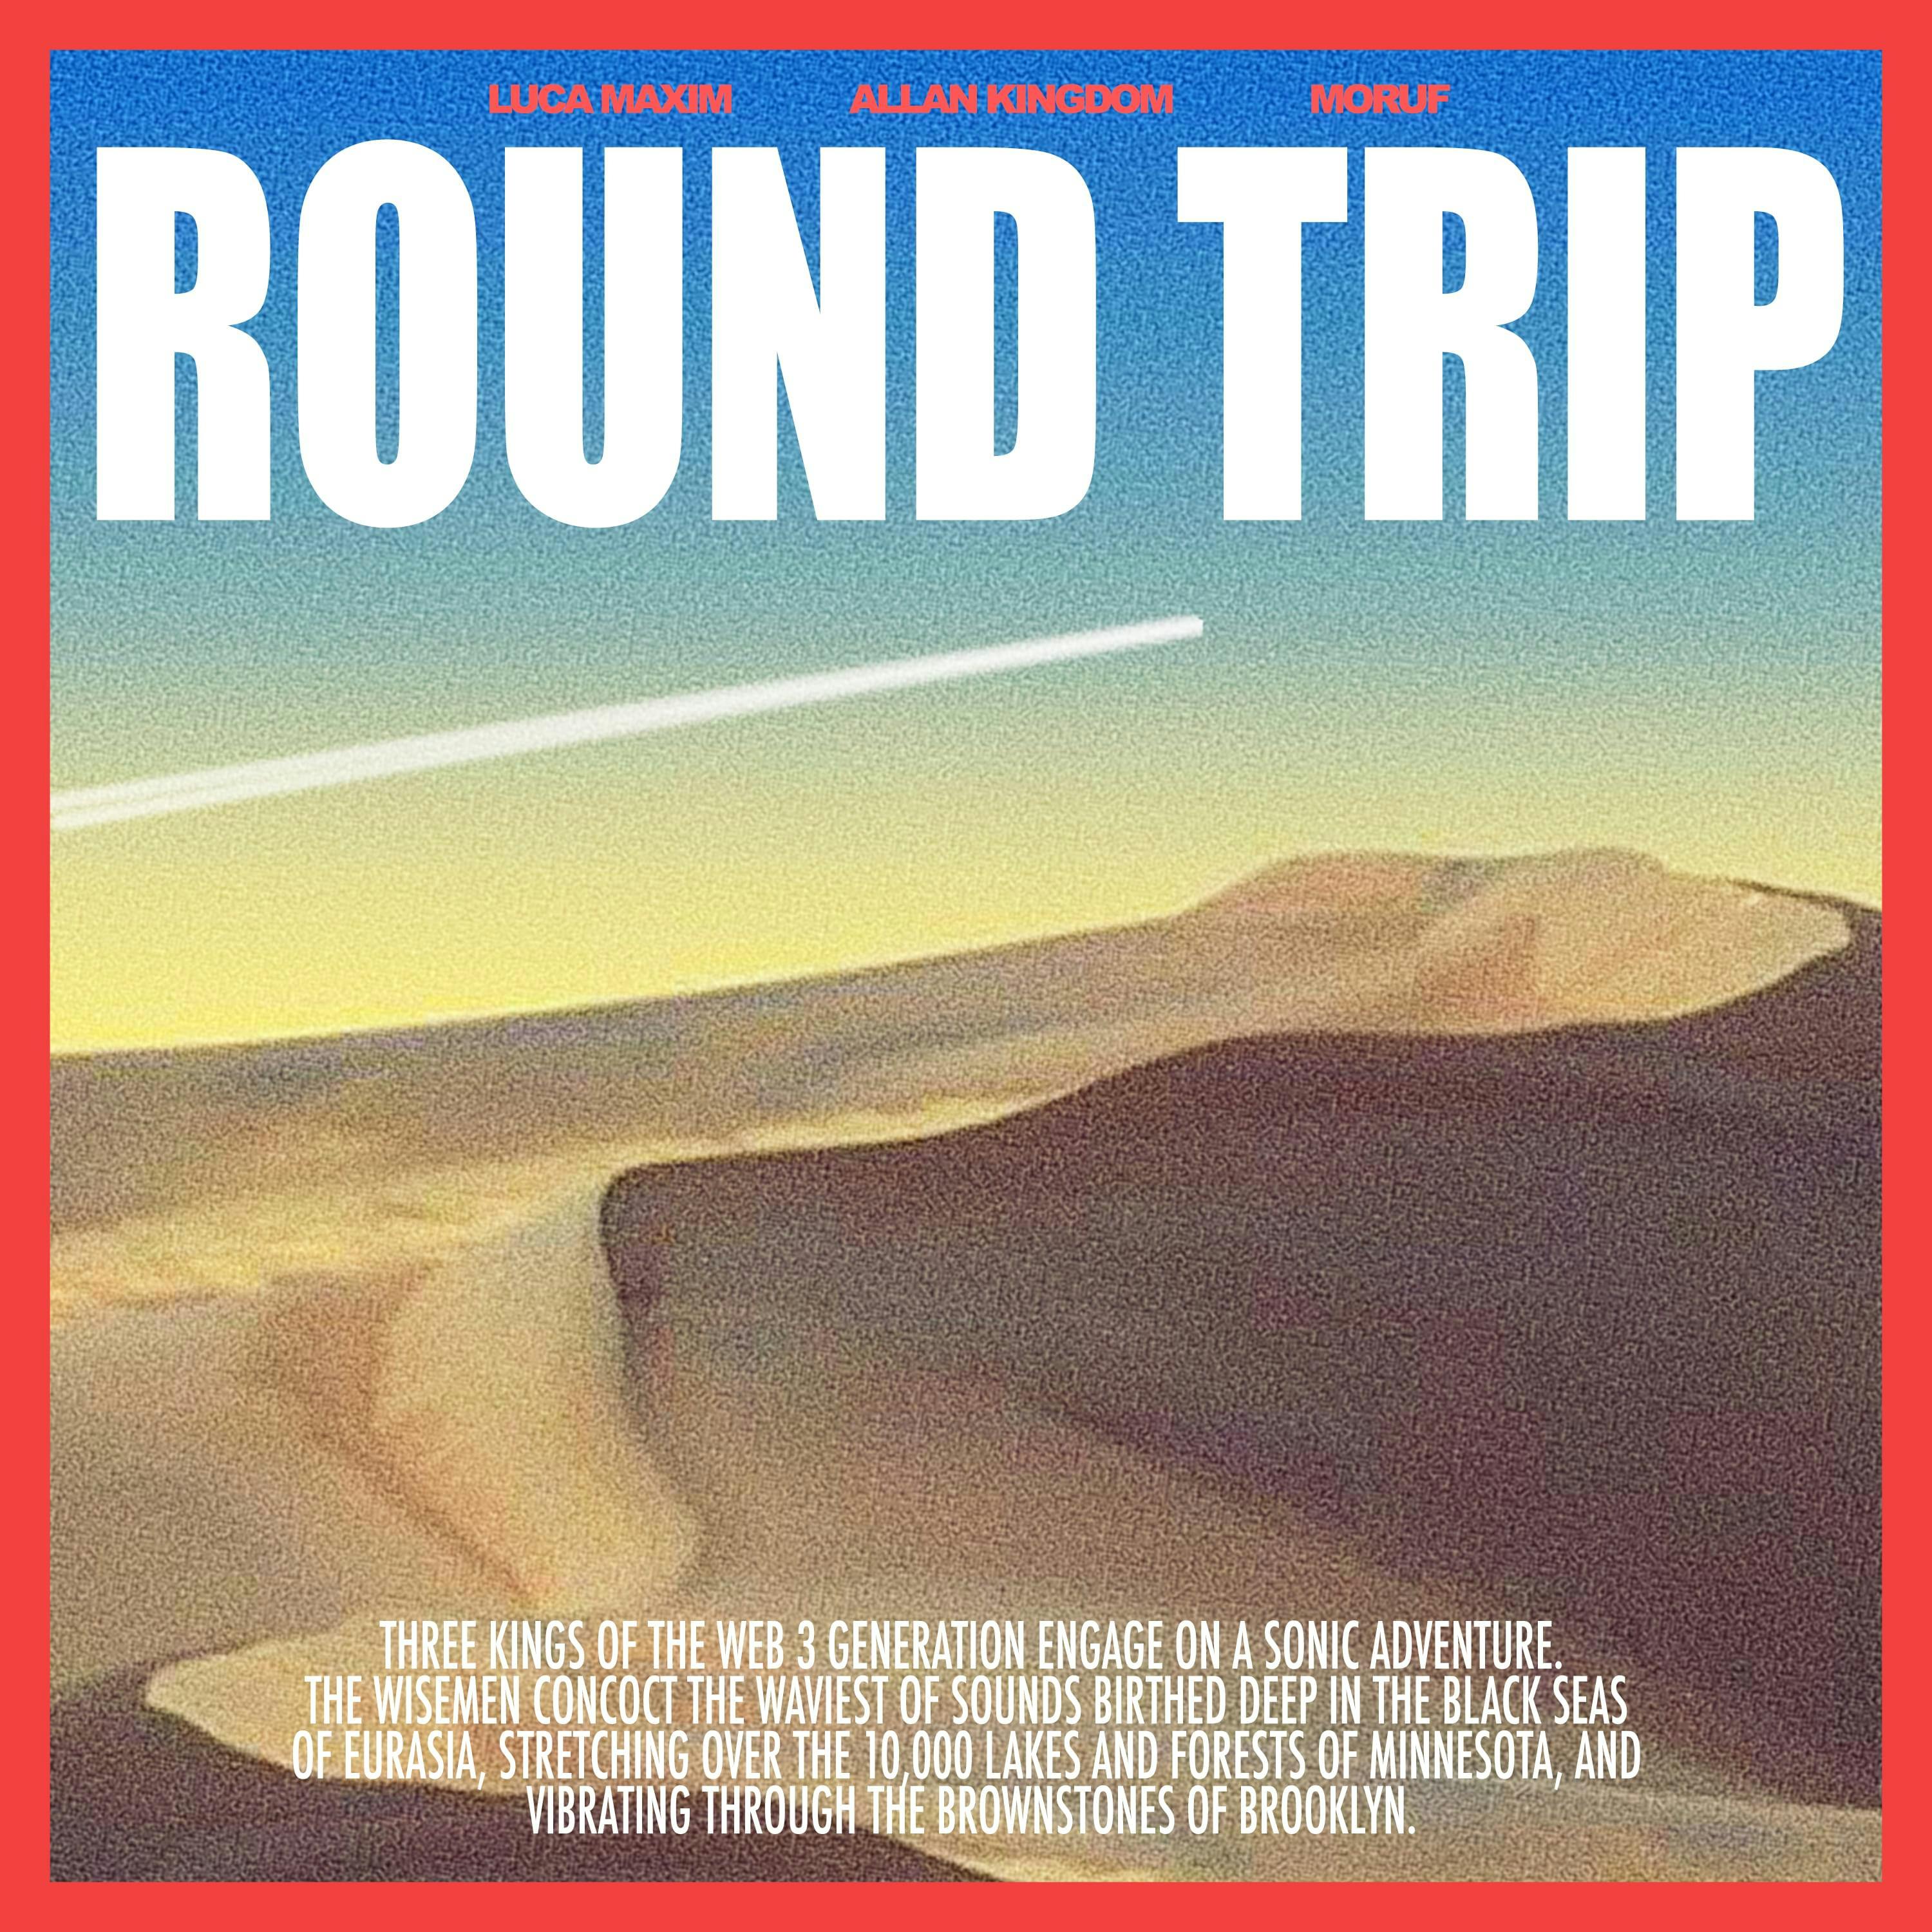 Cover art for Allan Kingdom's song: Round Trip w/ Luca Maxim & MoRuf